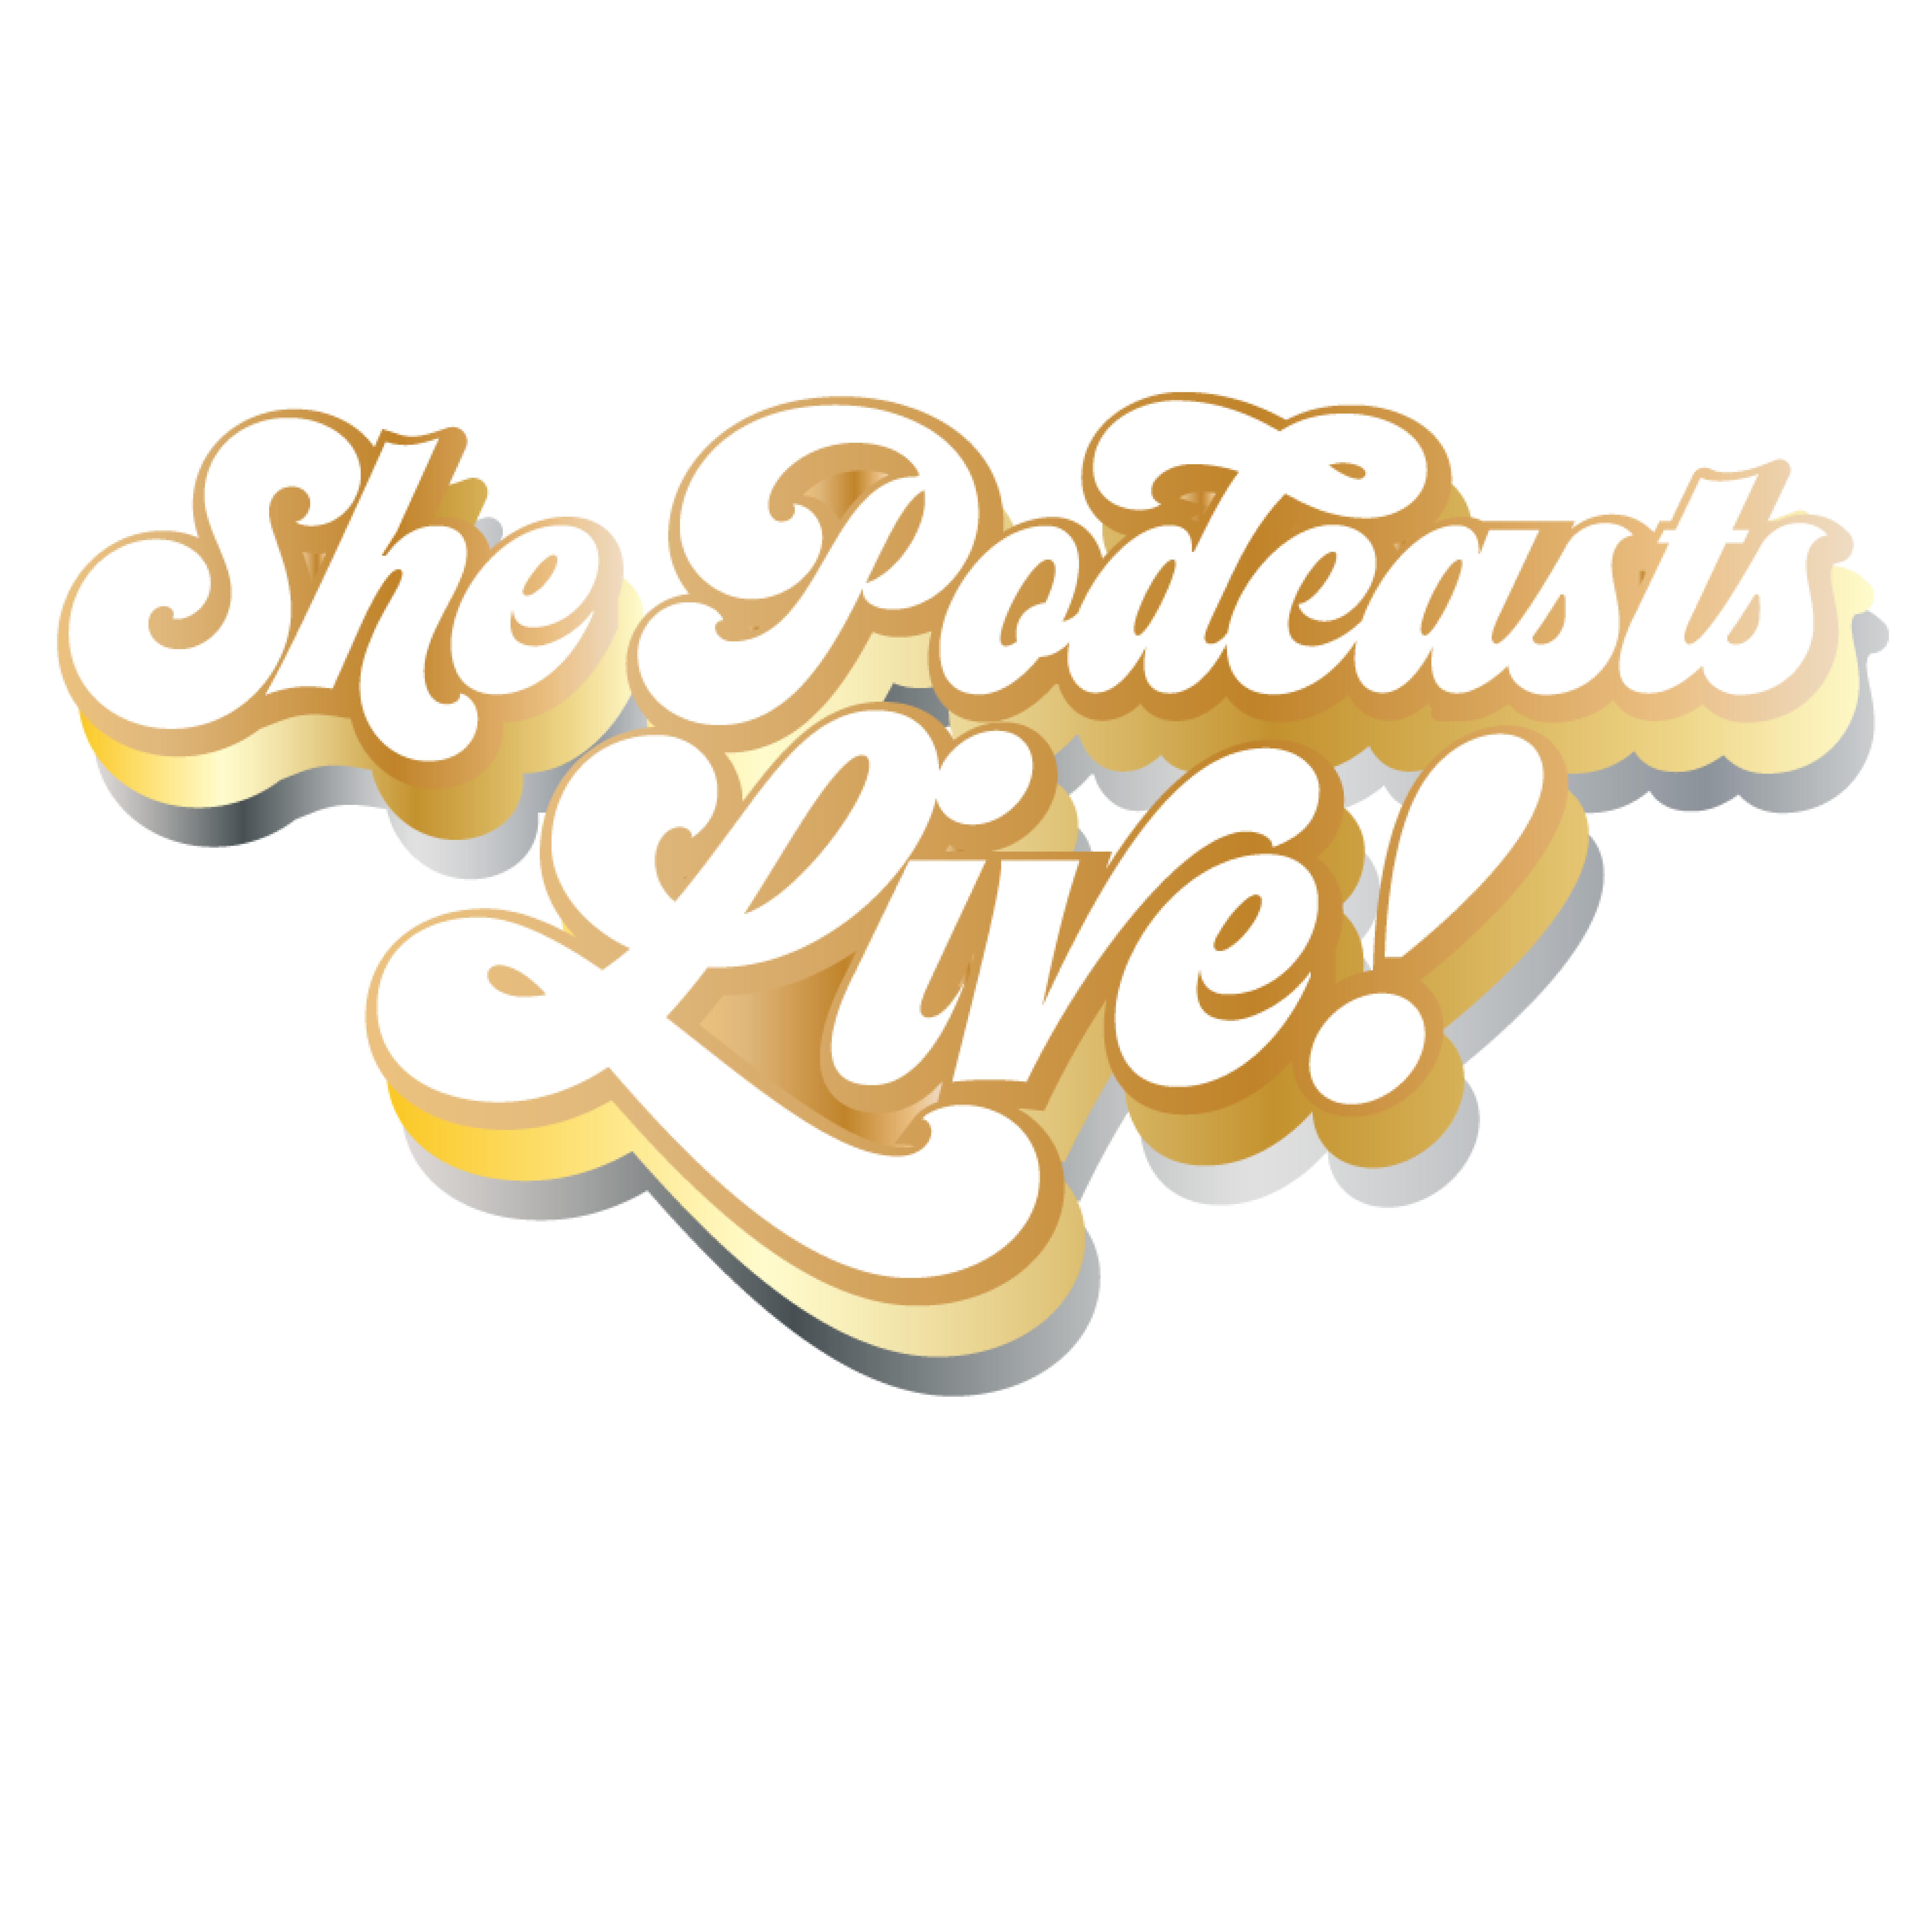 She Podcasts LIVE! 2023